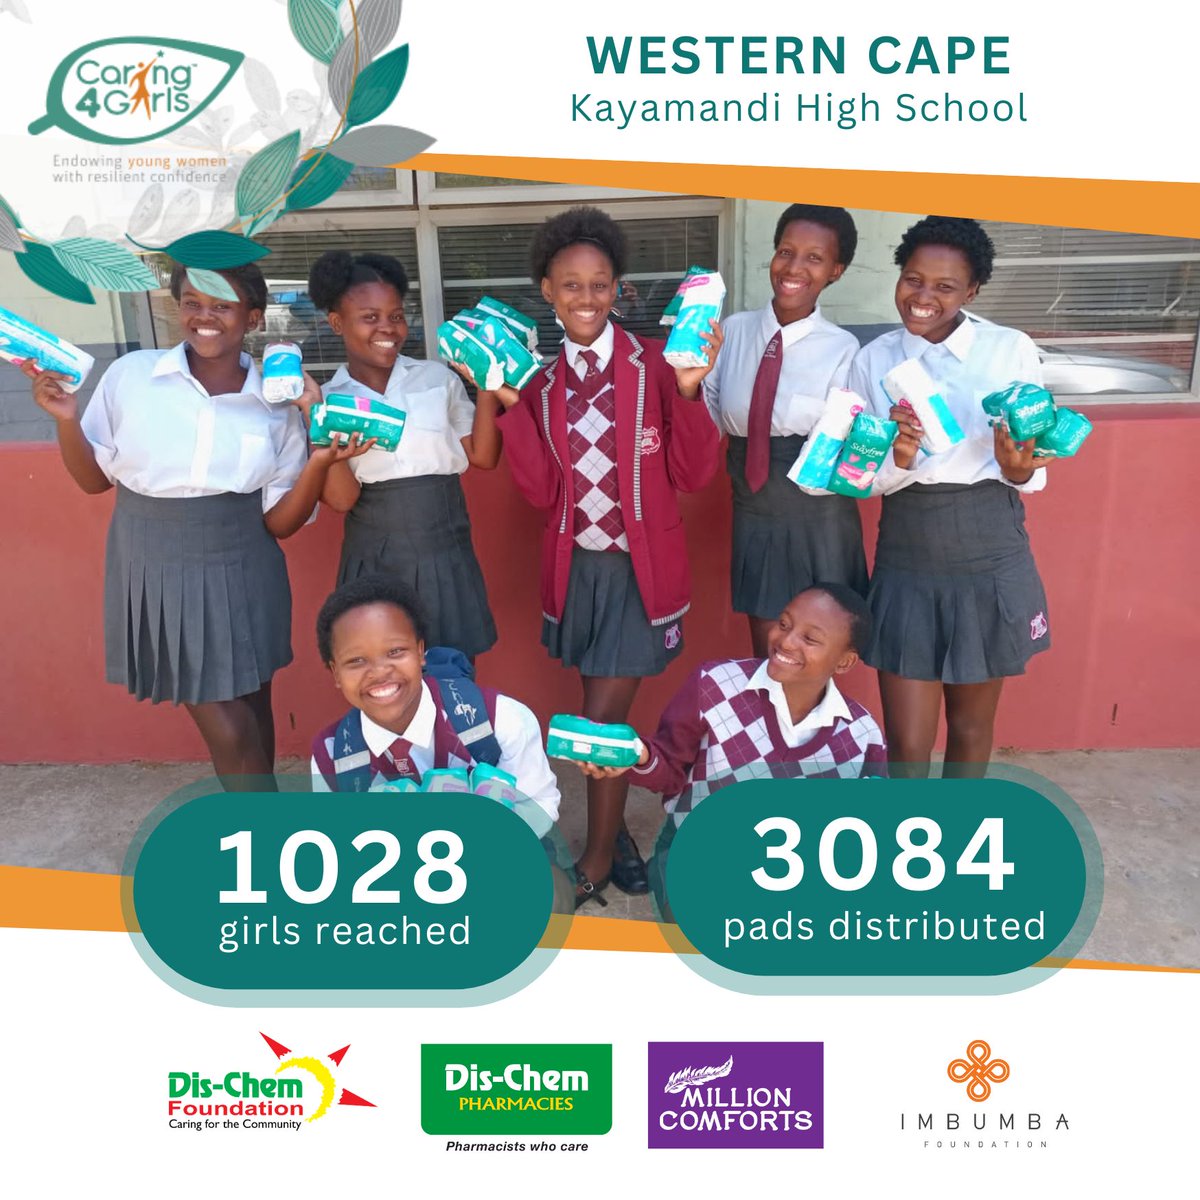 Yesterday we empowered 1999 girl children from Western Cape through #MillionComforts by providing them with 3 months supply of sanitary pads. #KeepingTheGirlChildInSchool #DisChemFoundation #MakeADifference @Dischem